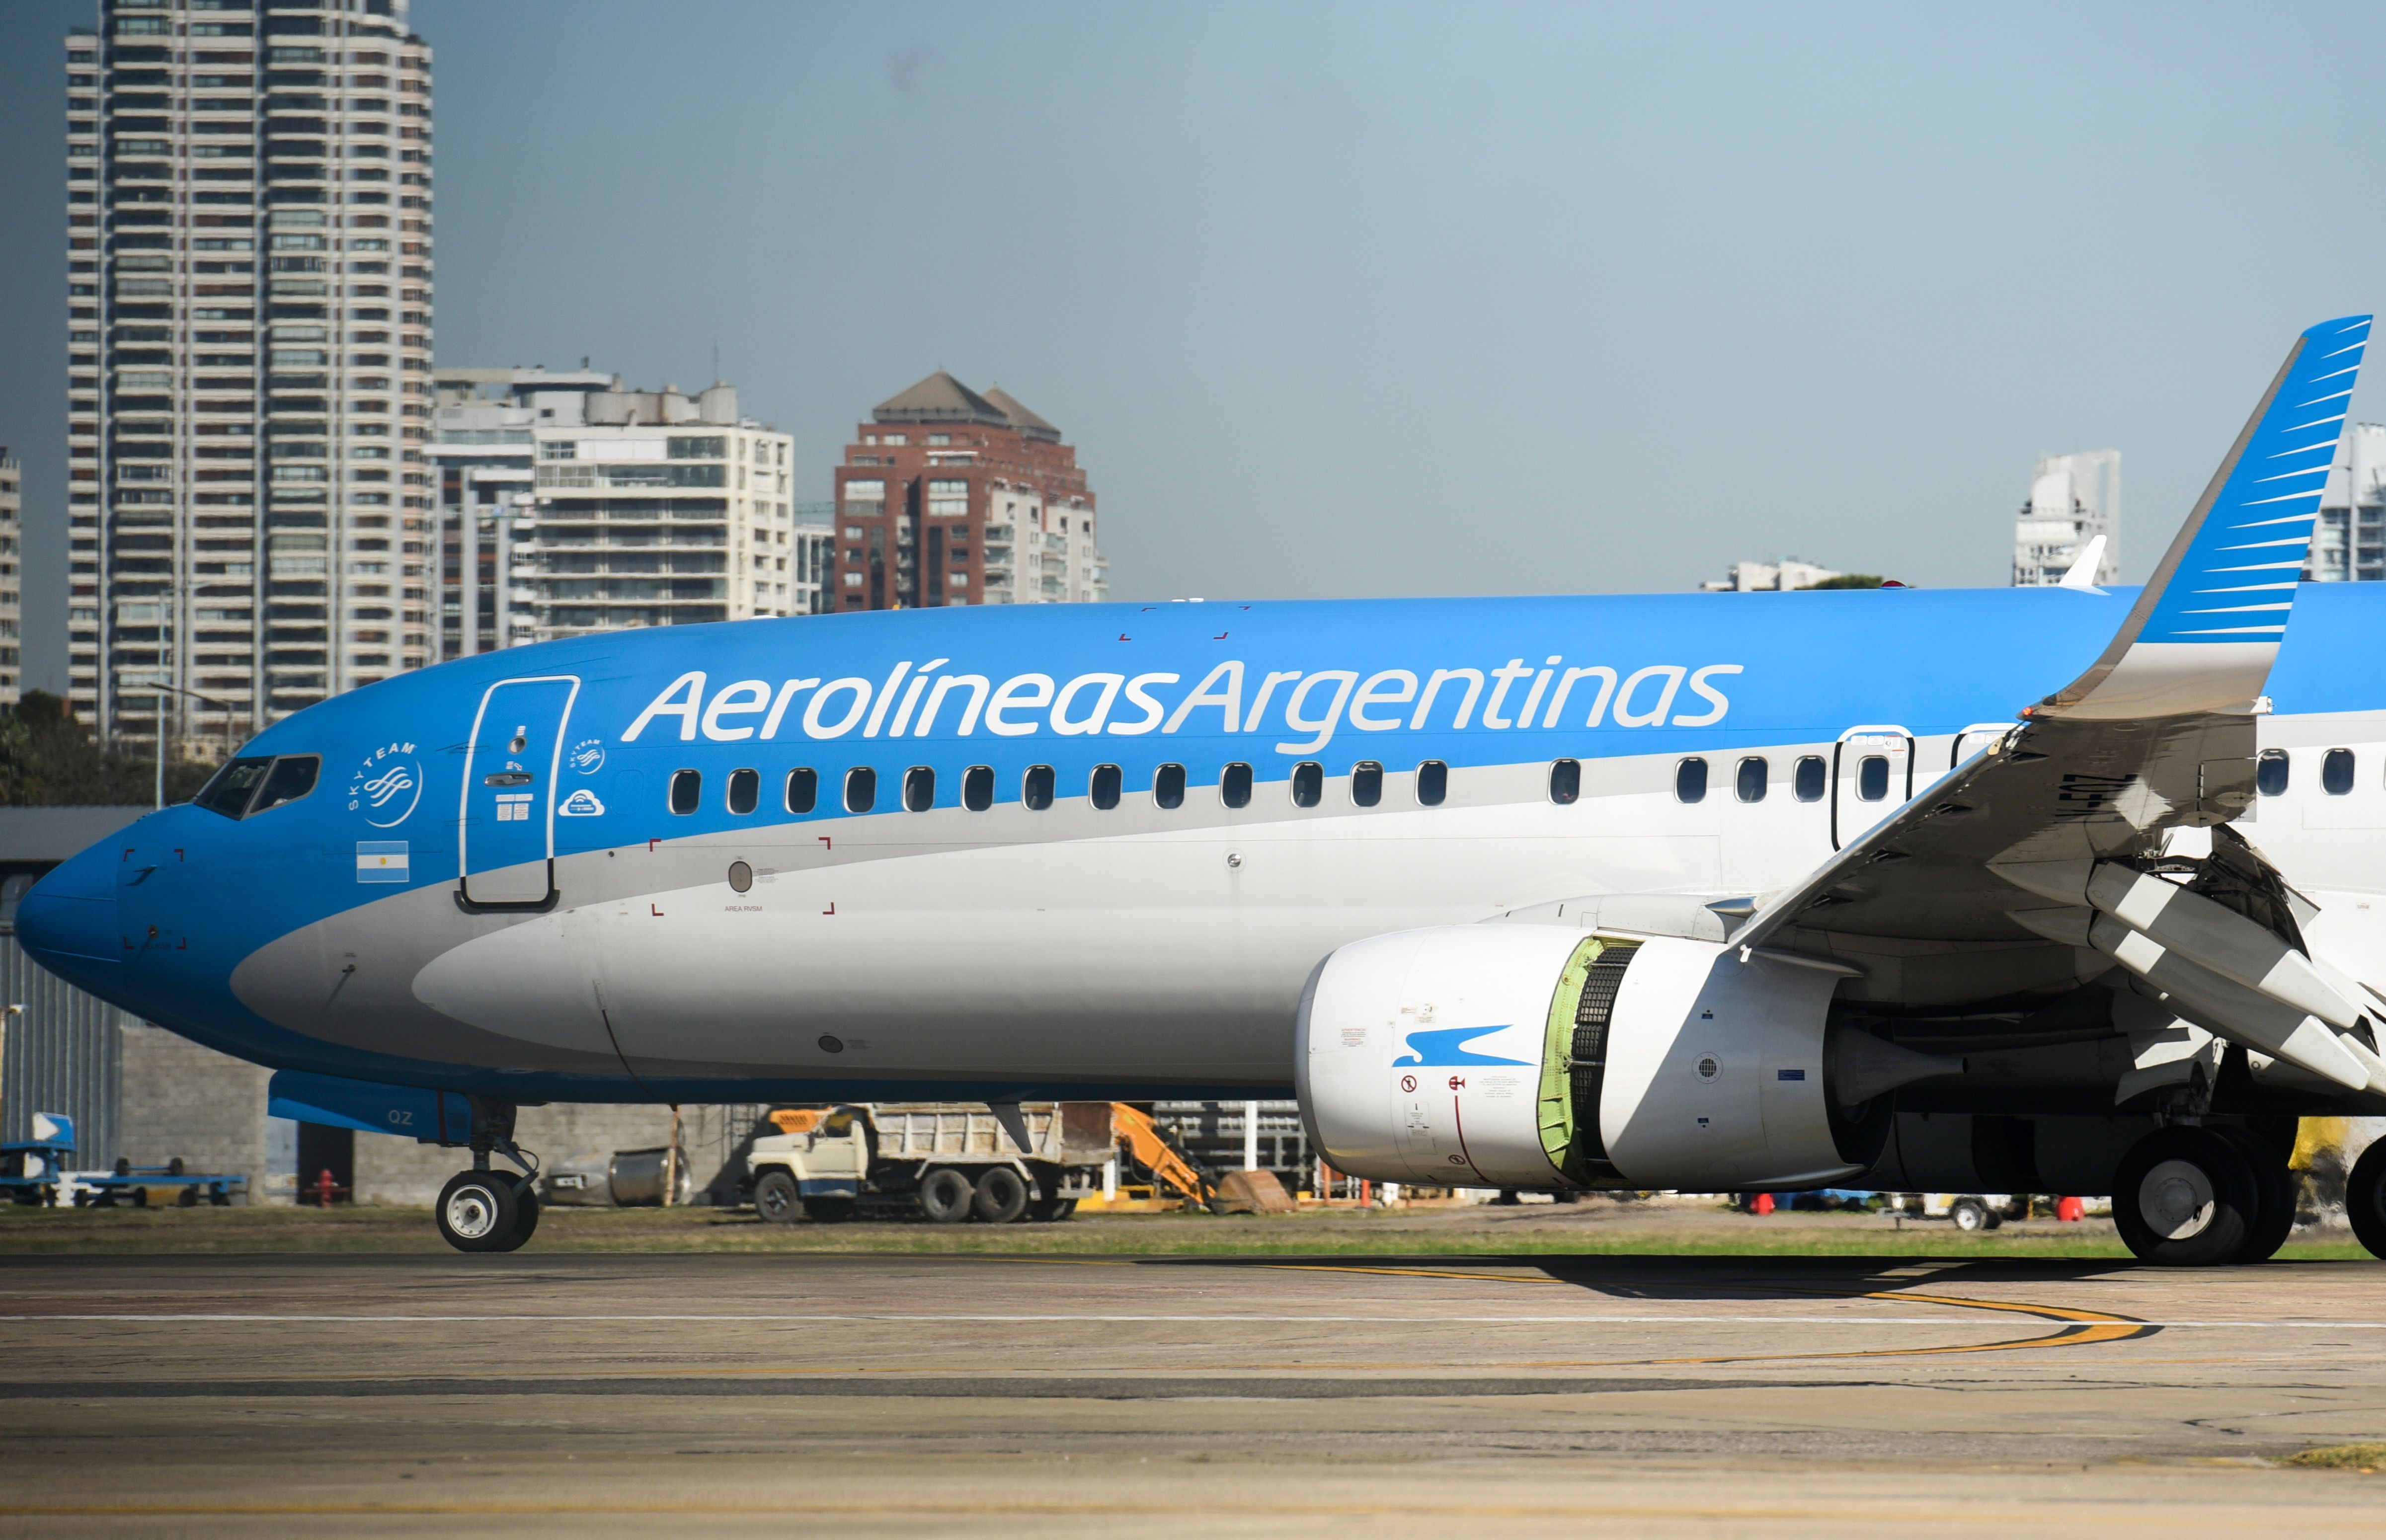 An Aerolíneas Argentinas aircraft